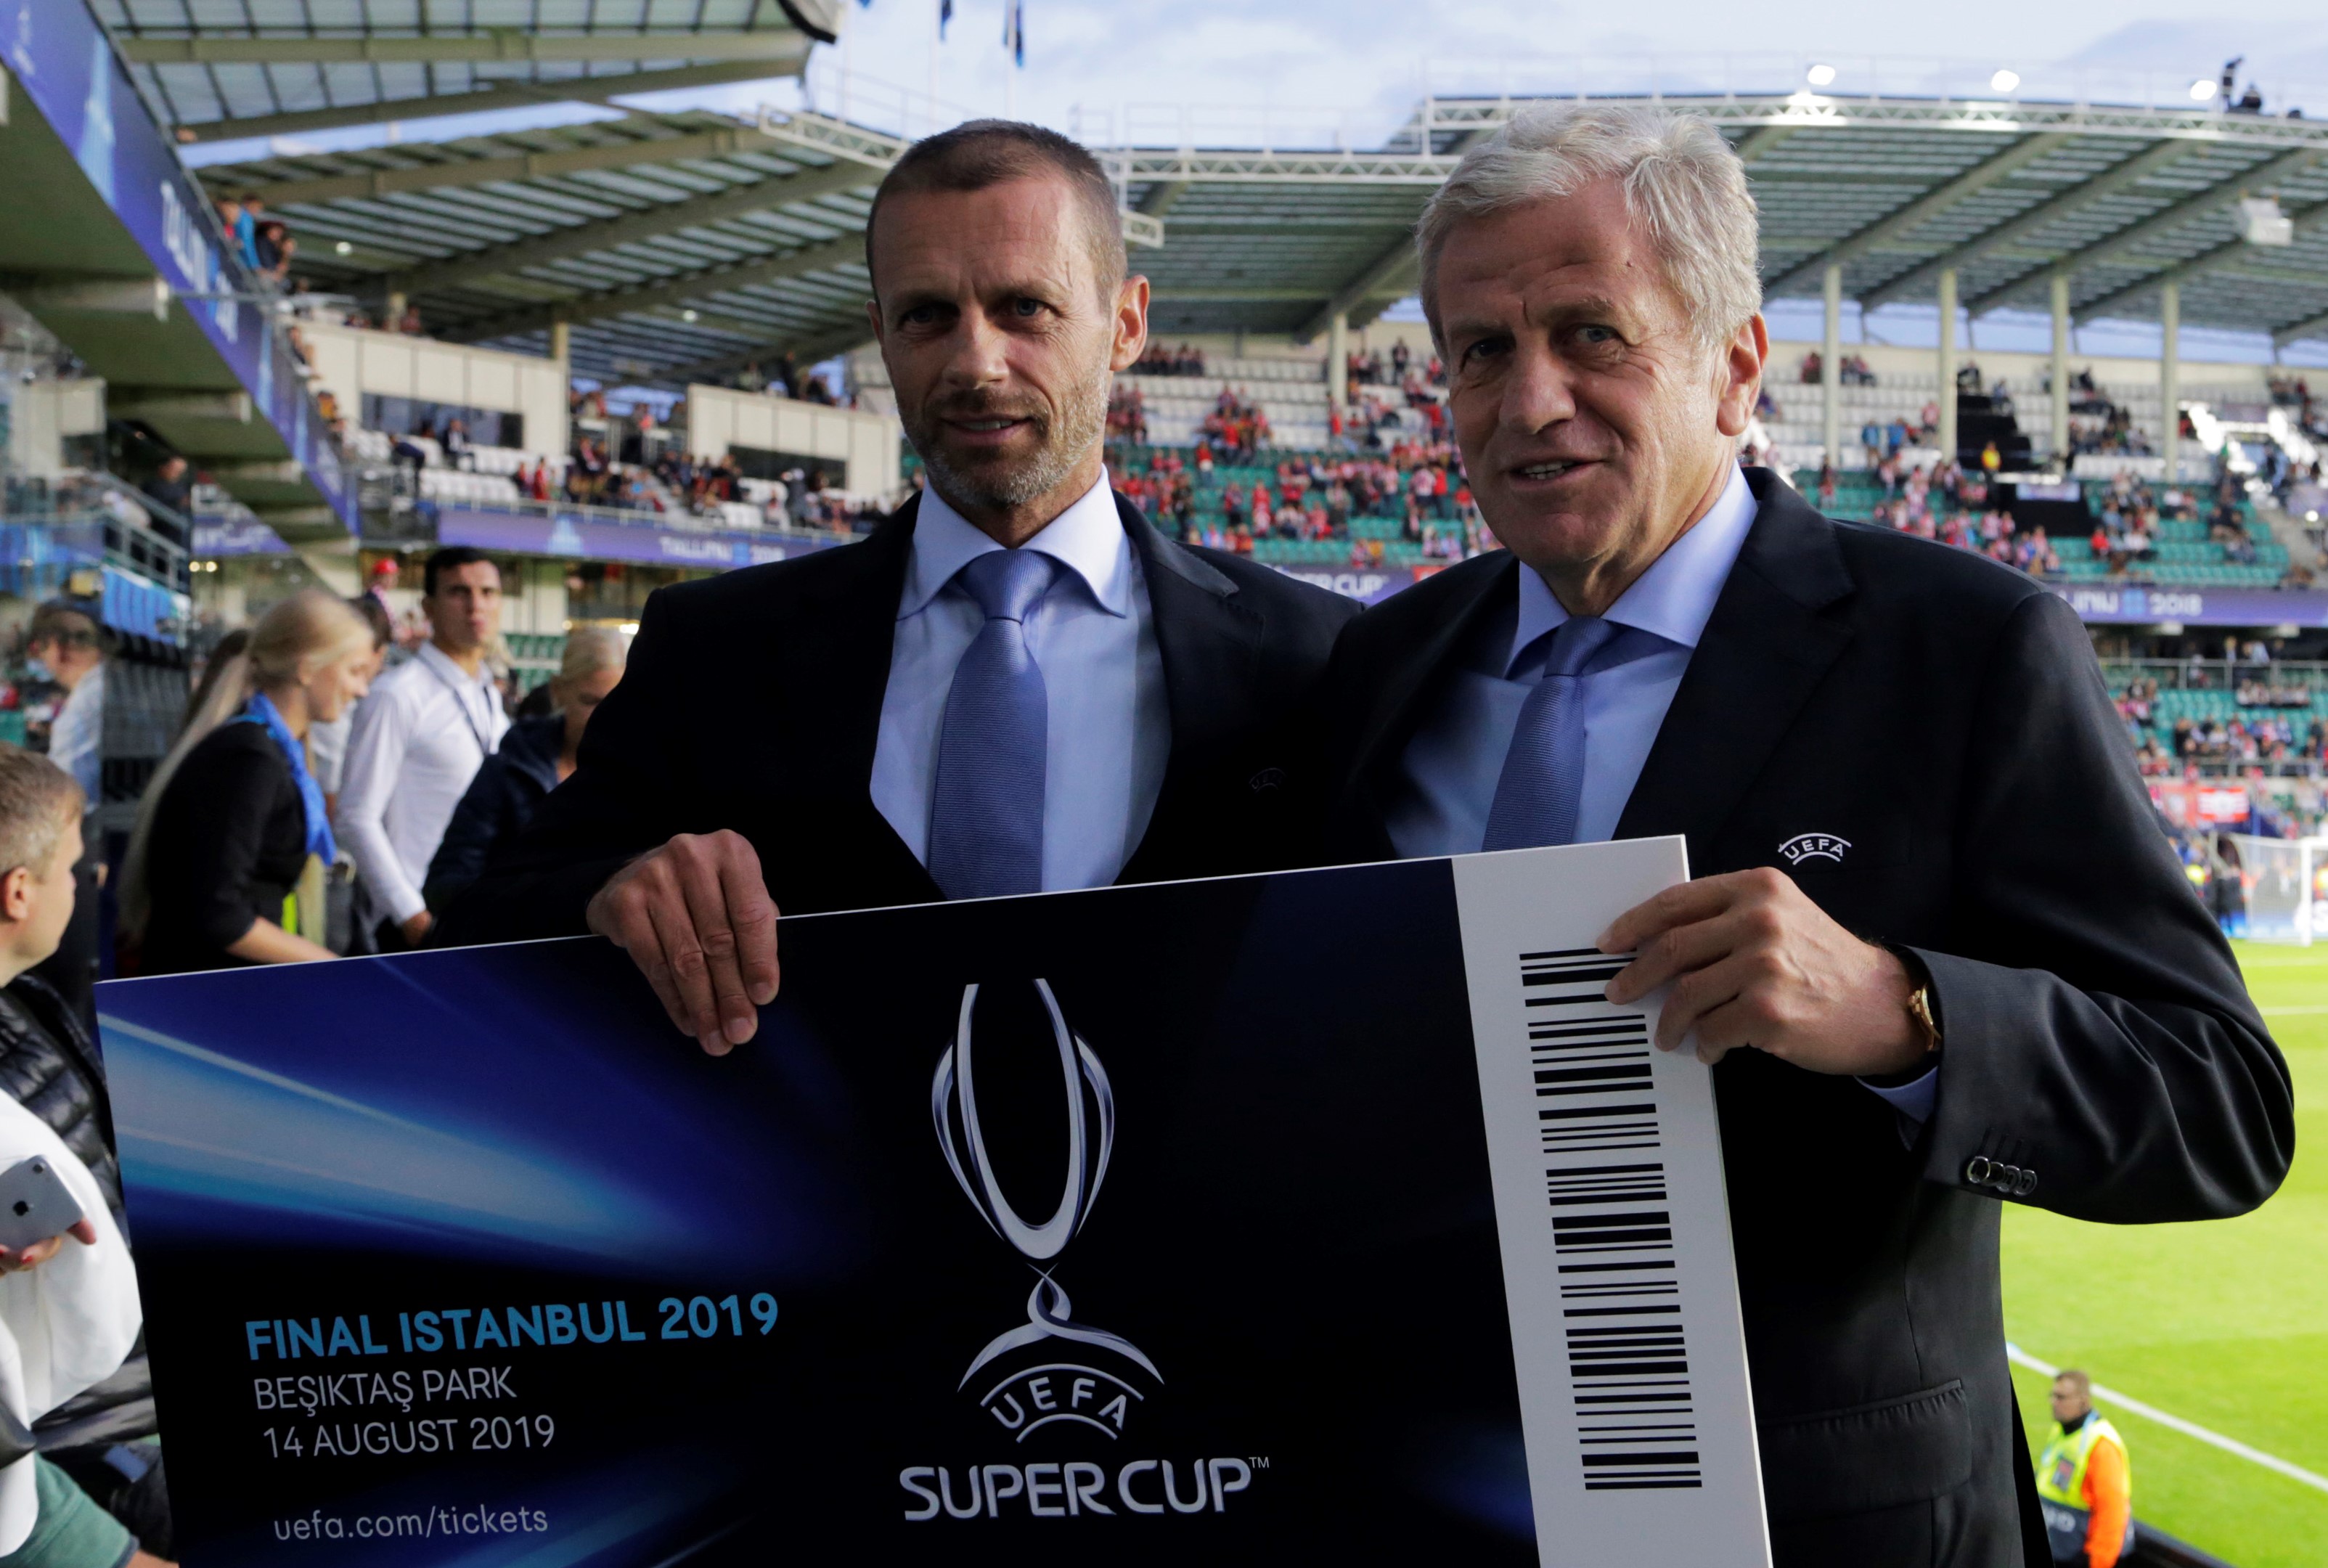 Tallinn could host 2018 UEFA Super Cup, News